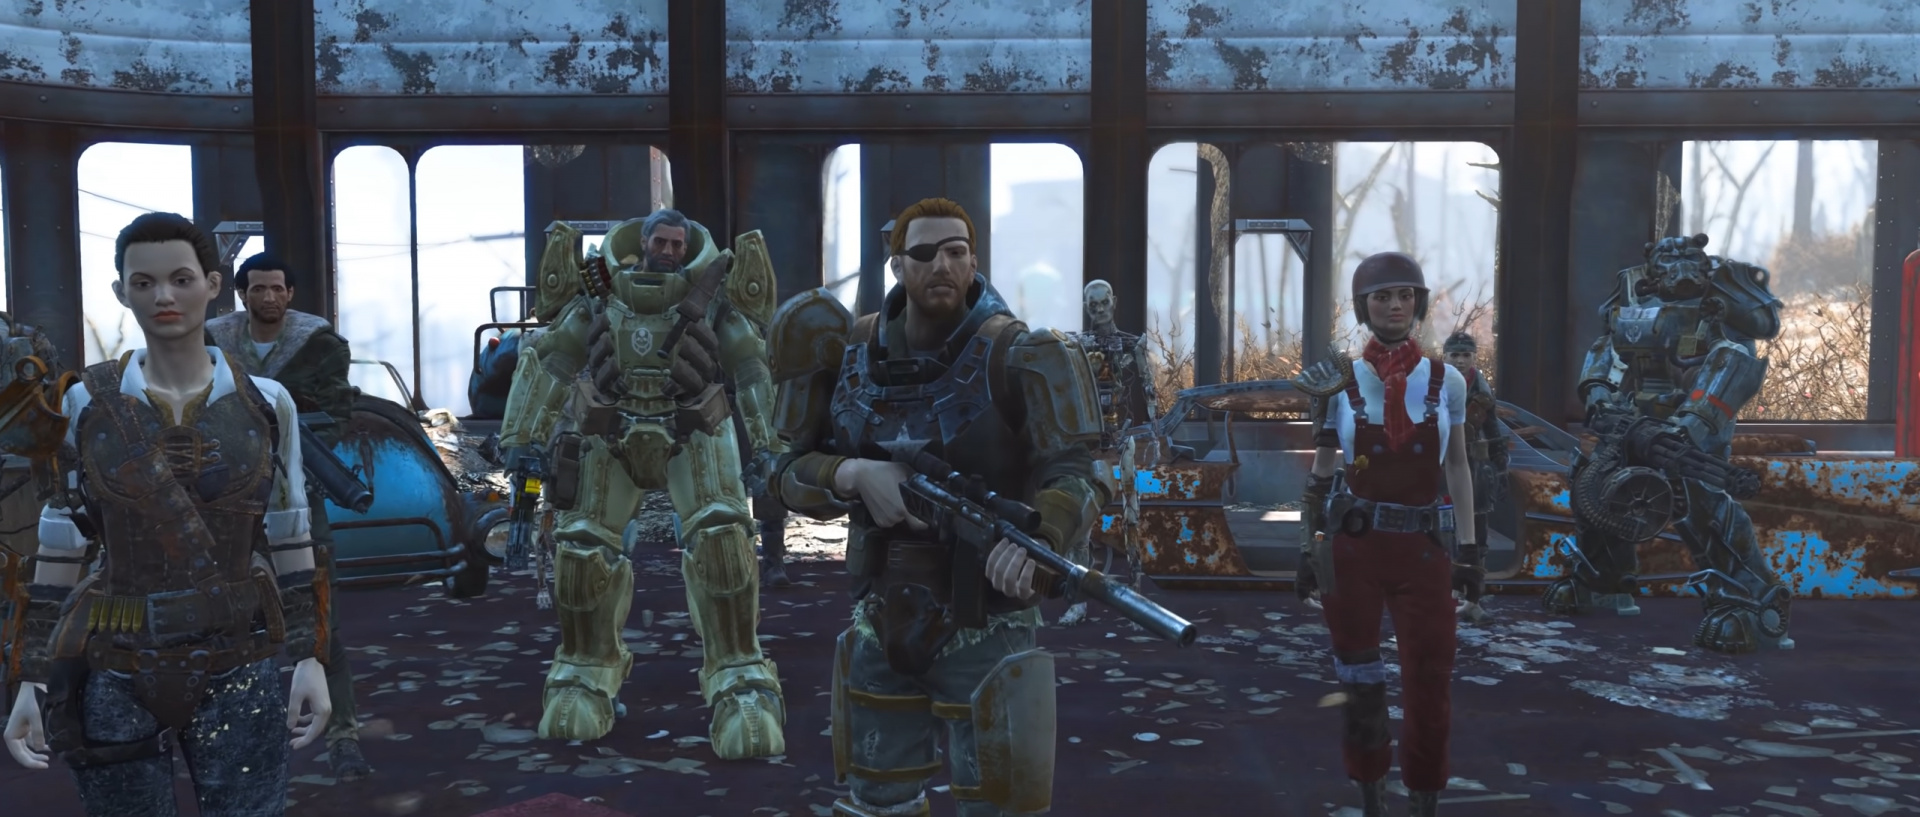 Fallout 4 sims settlement 2 rus (119) фото